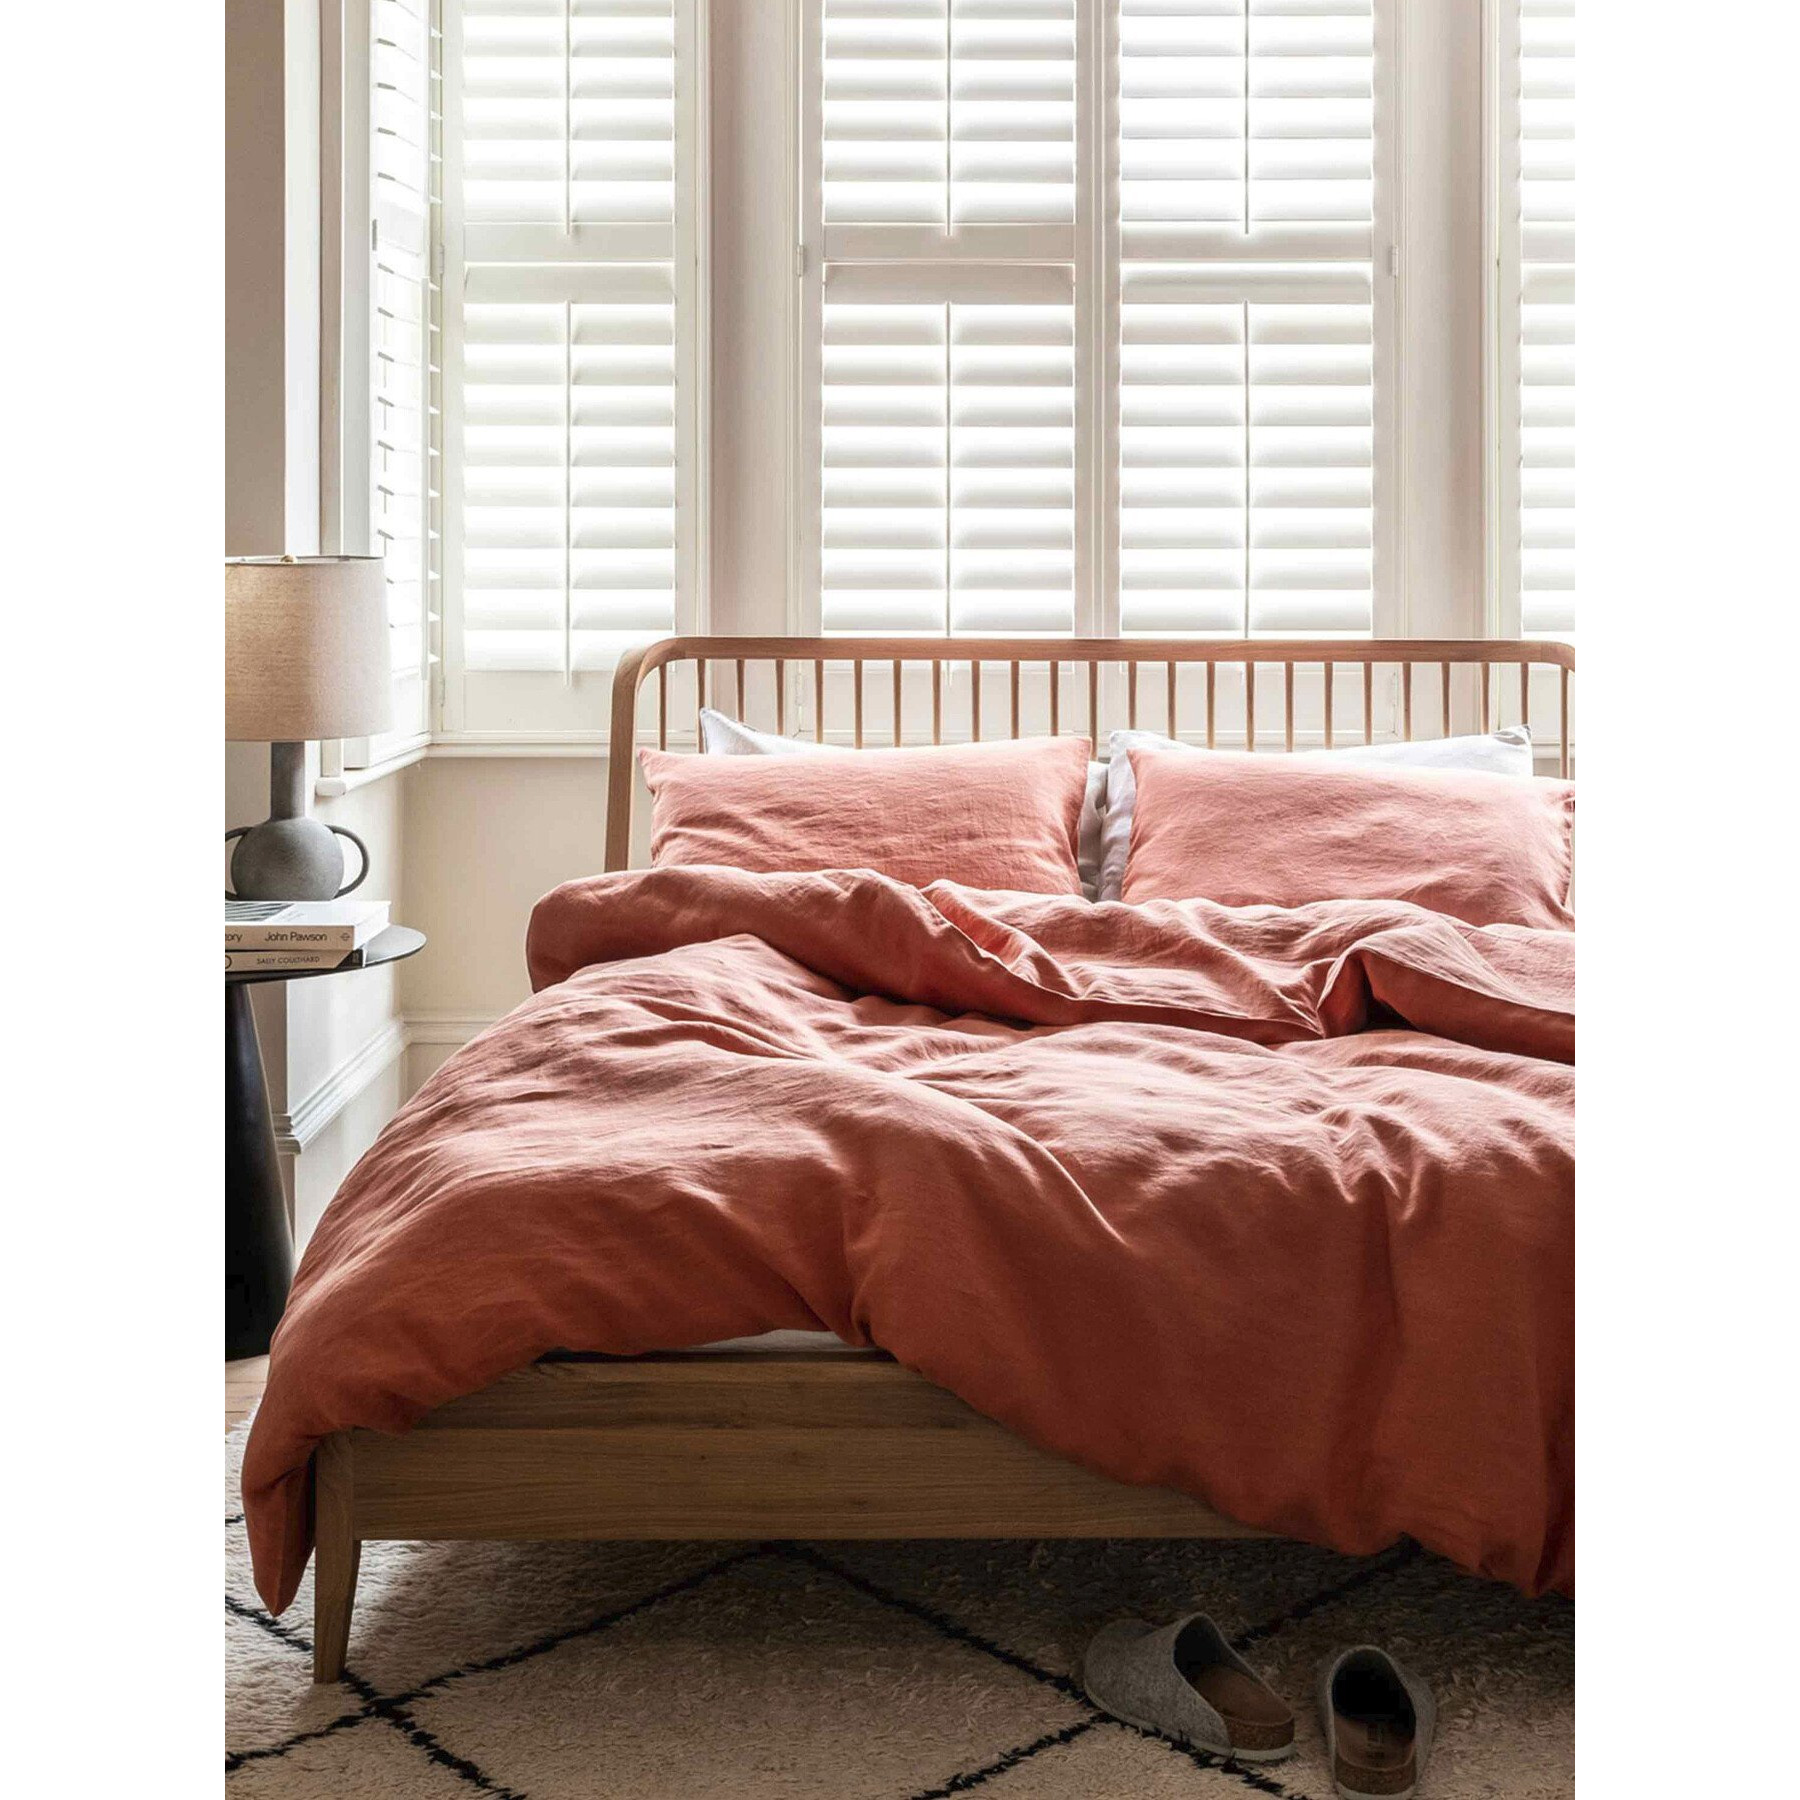 Piglet in Bed Linen Fitted Sheet - Size Single Orange - image 1